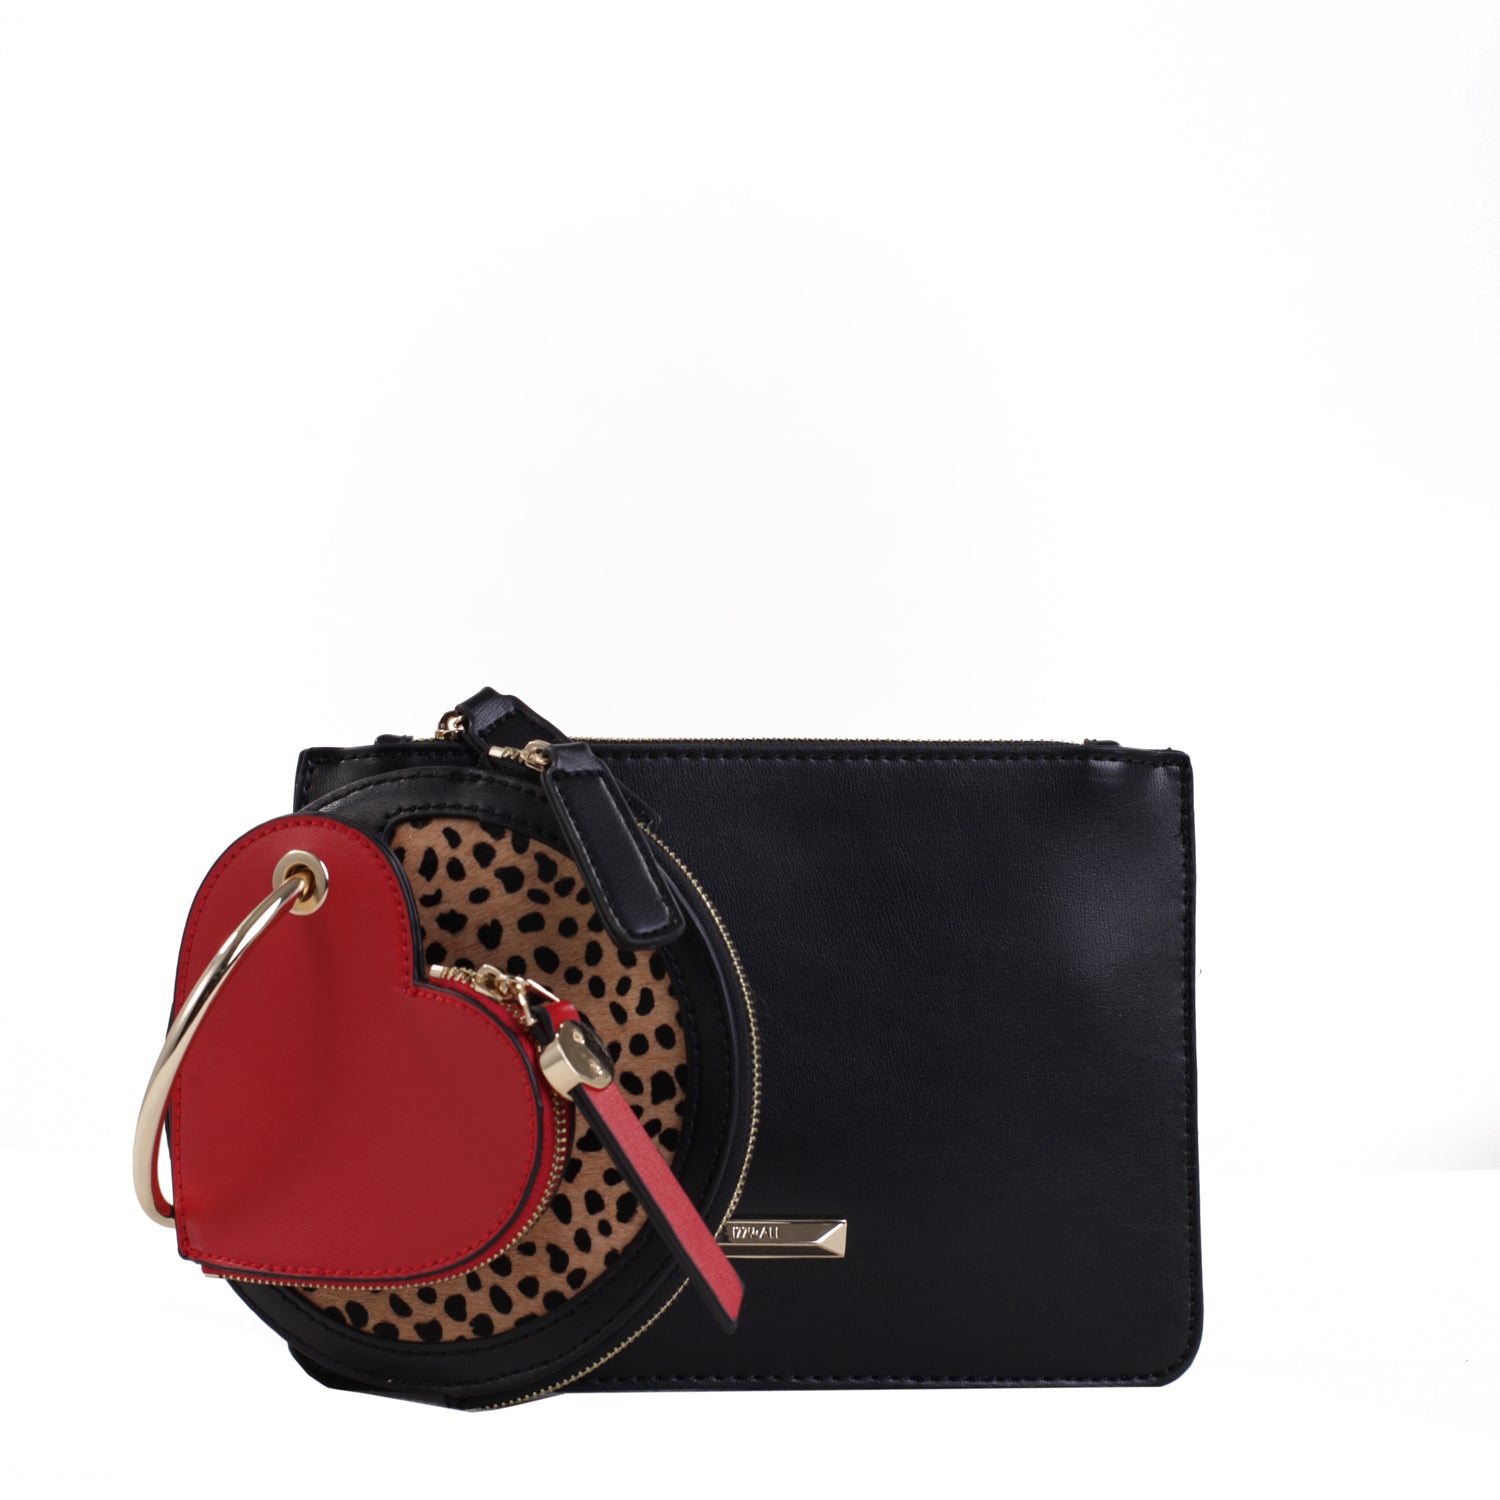 Handbag Bliss Small Italian Leather Saddle Cross Body Bag / Shoulder Bag  Clutch Detachable Strap